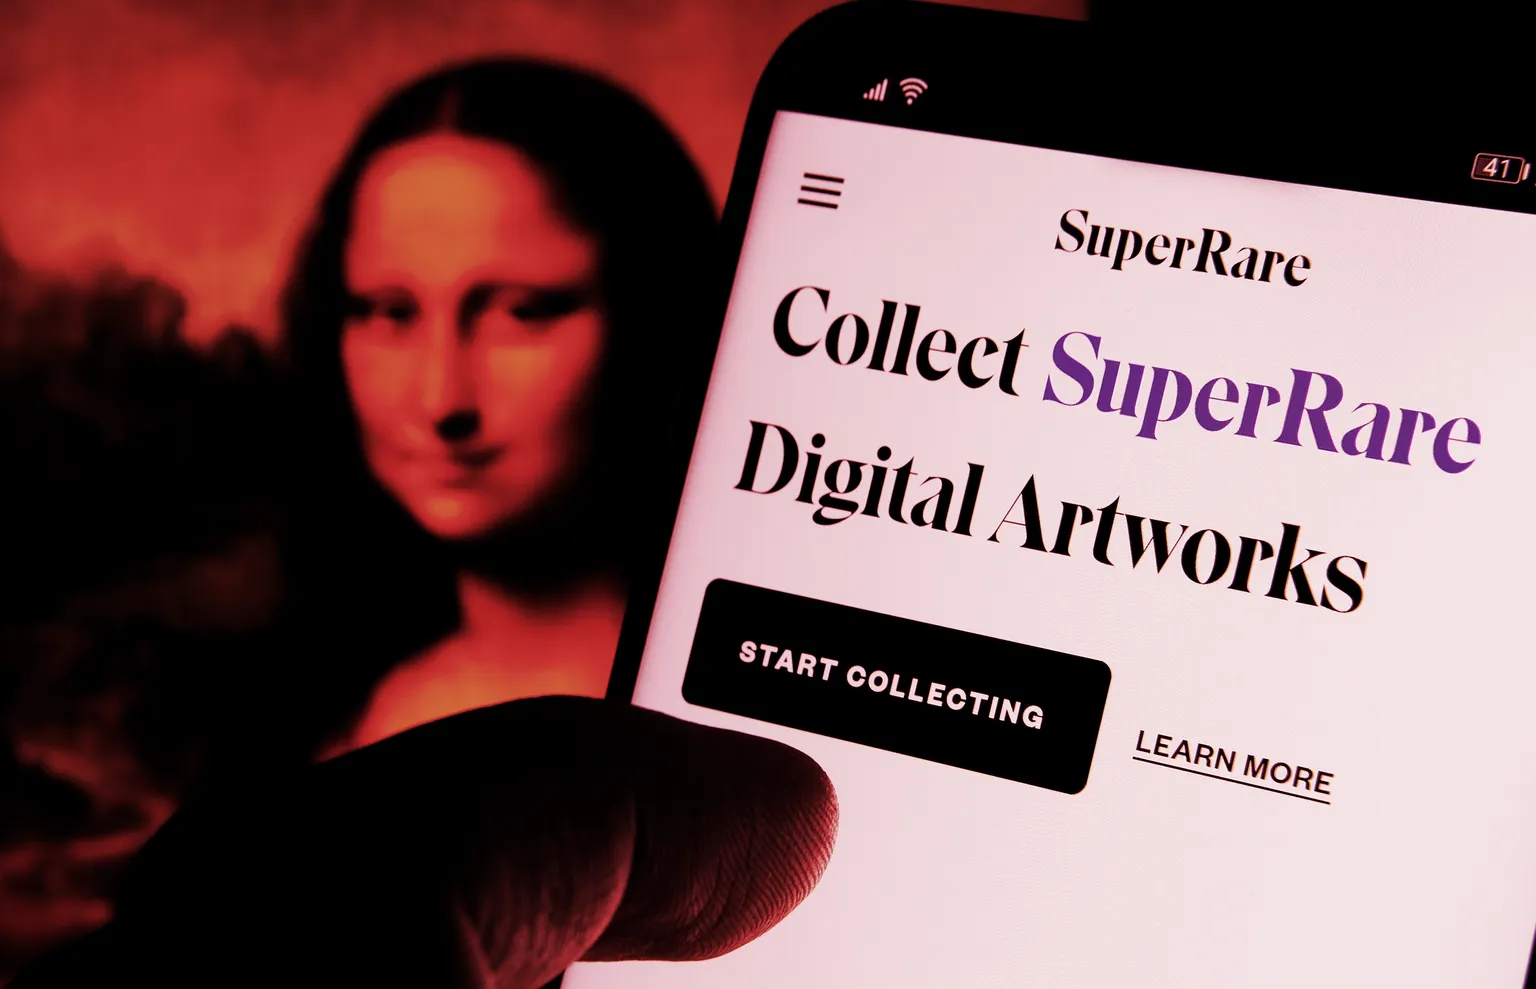 SuperRare digital artwork website seen on smartphone and Mona Lisa on a blurred background. Stafford, United Kingdom, March 31, 2021 (Shutterstock)